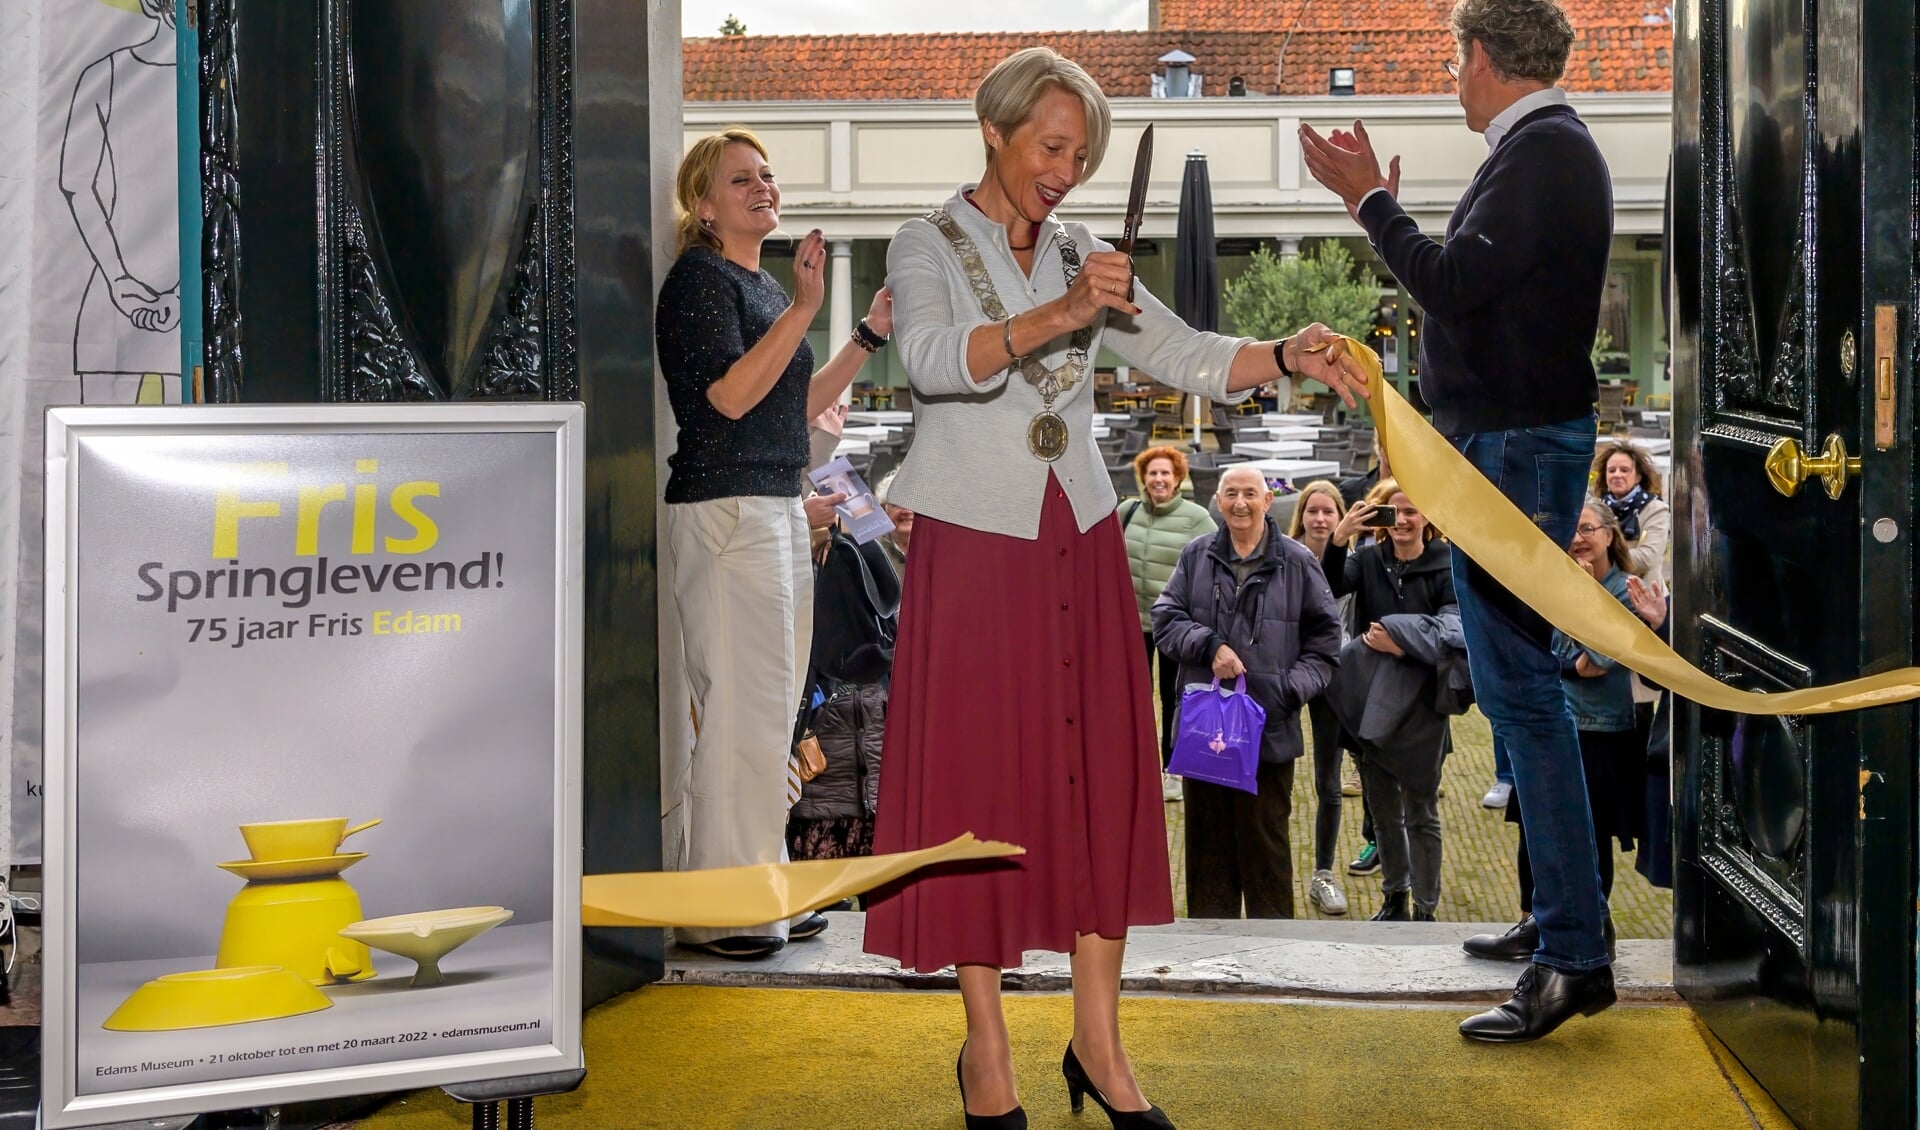 Burgemeester Sievers opent tentoonstelling Fris Springlevend! 75 jaar Fris Edam.